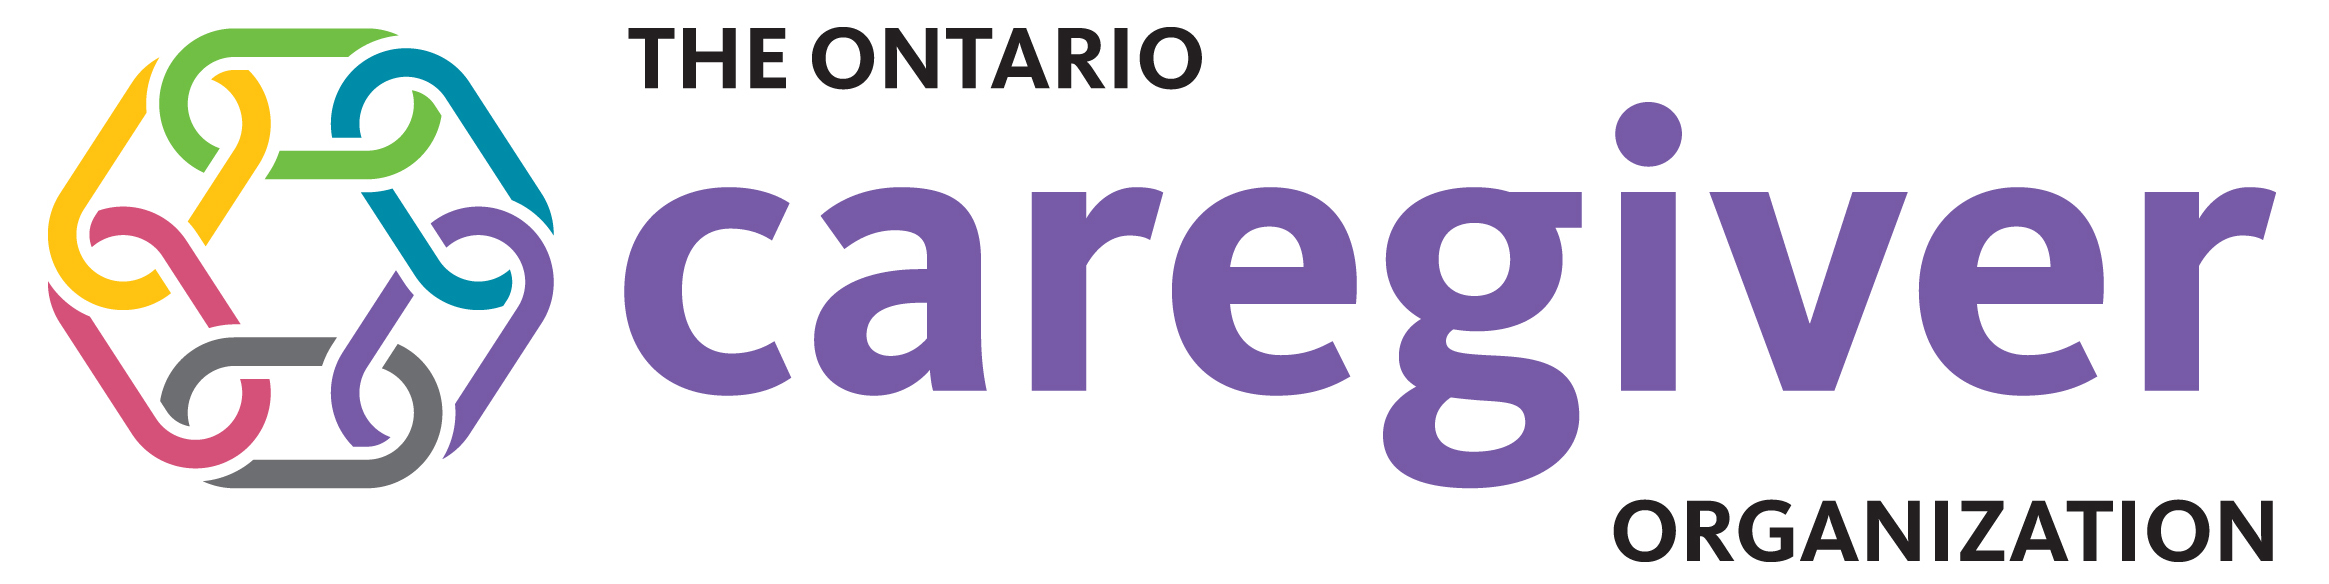 The Ontario Caregiver Organization